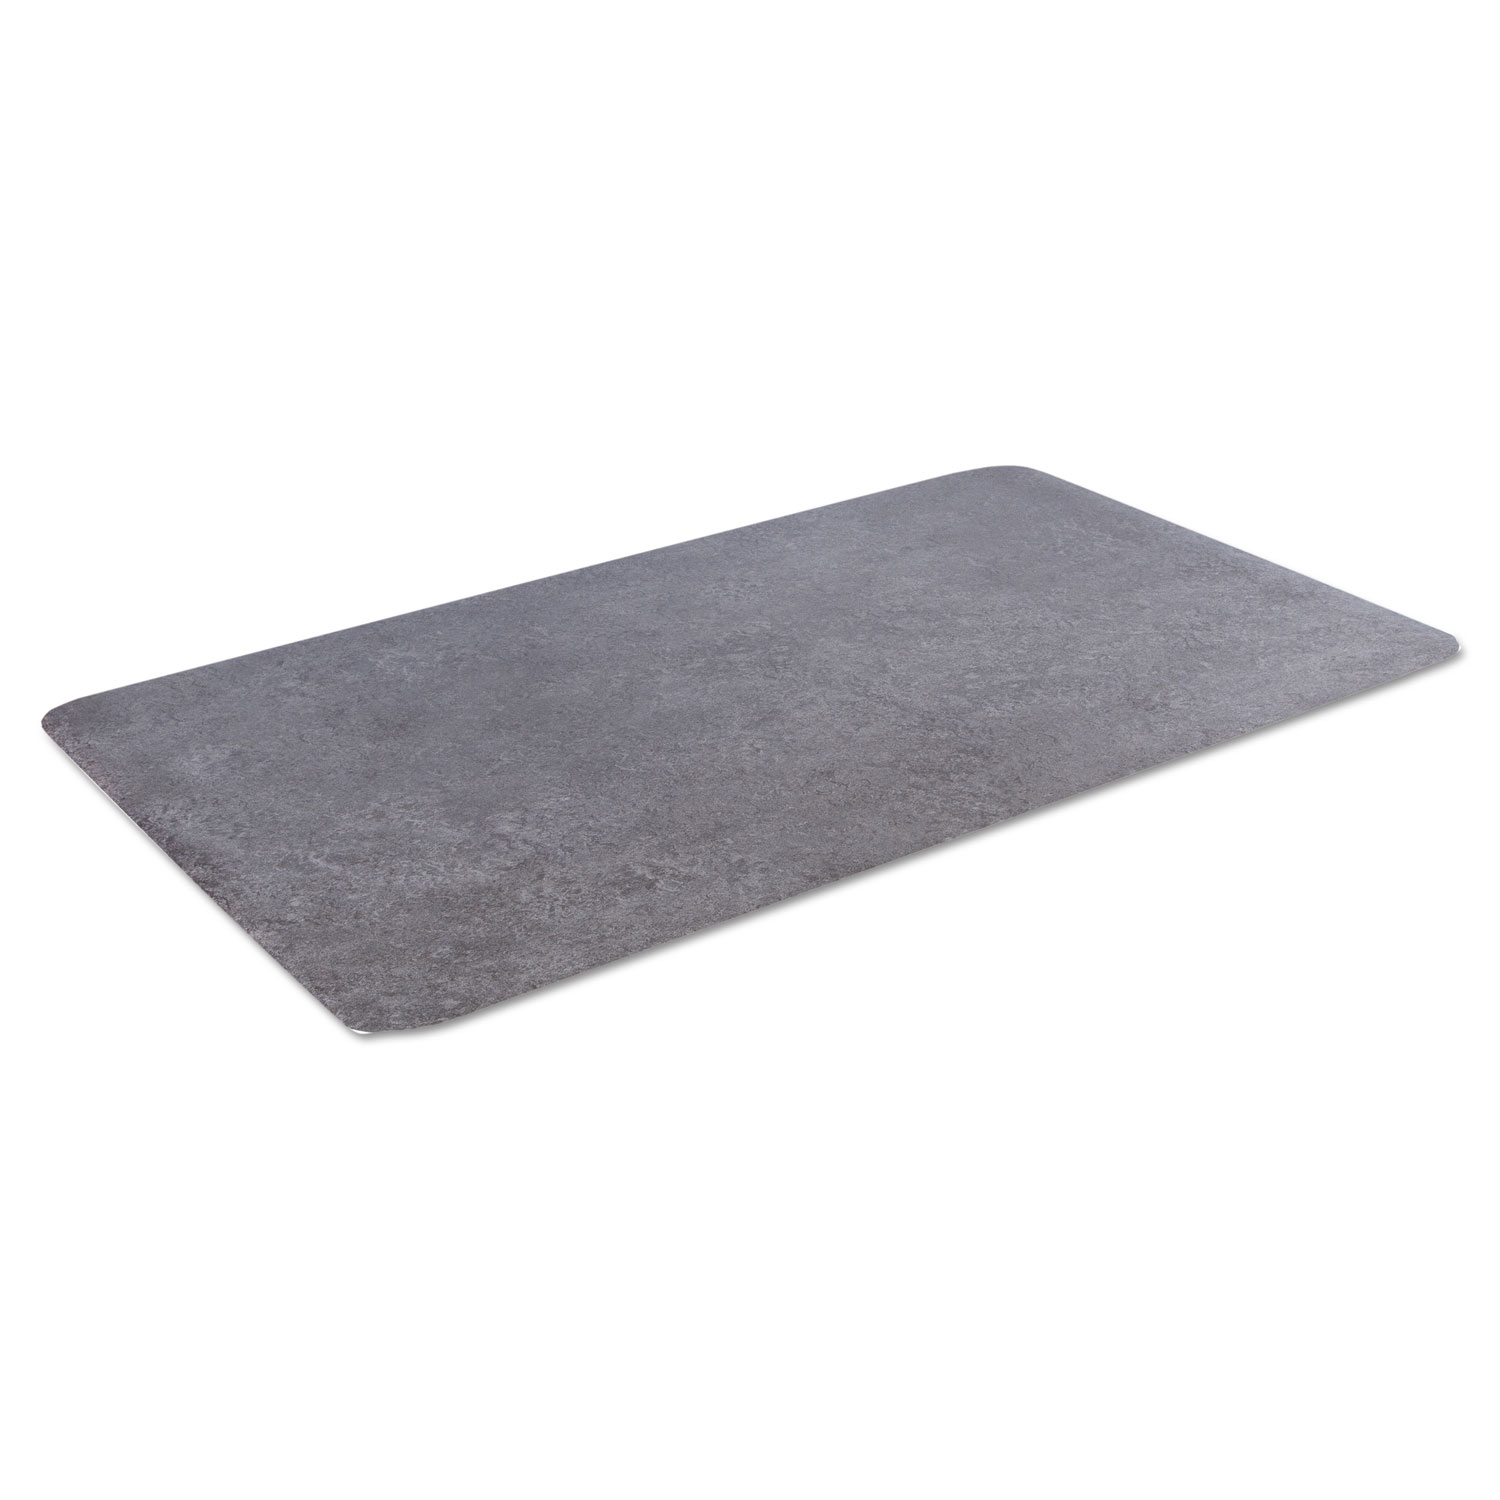 Workers-Delight Slate Standard Anti-Fatigue Mat, 36 x 60, Dark Gray